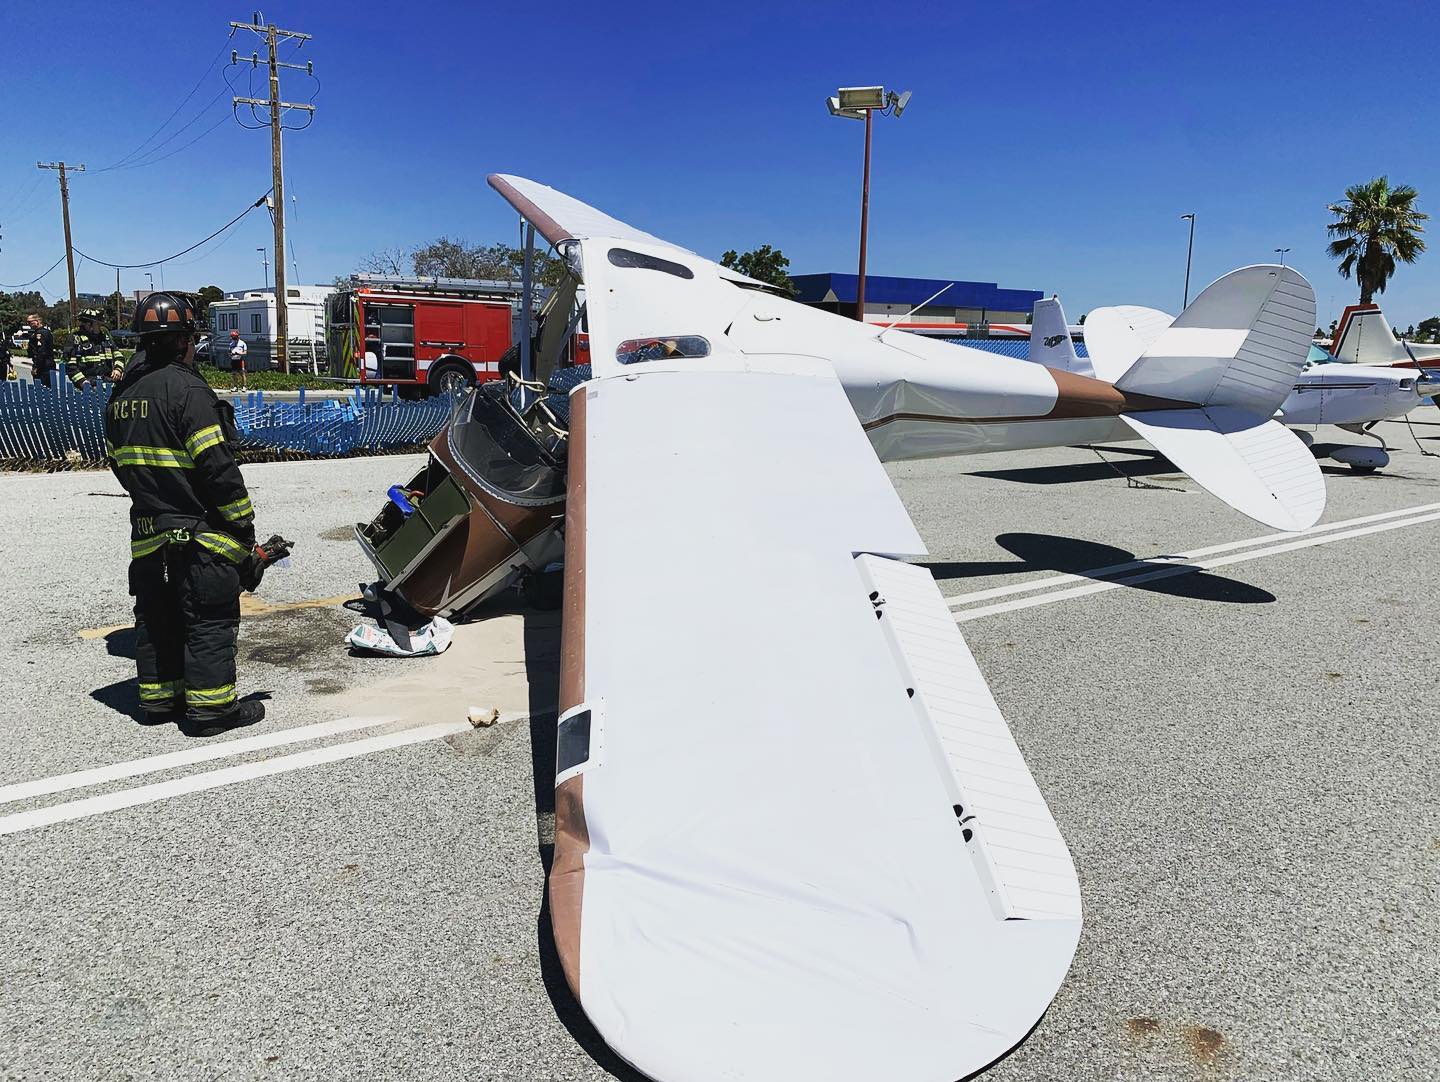 Minor injuries in small plane crash at San Carlos Airport